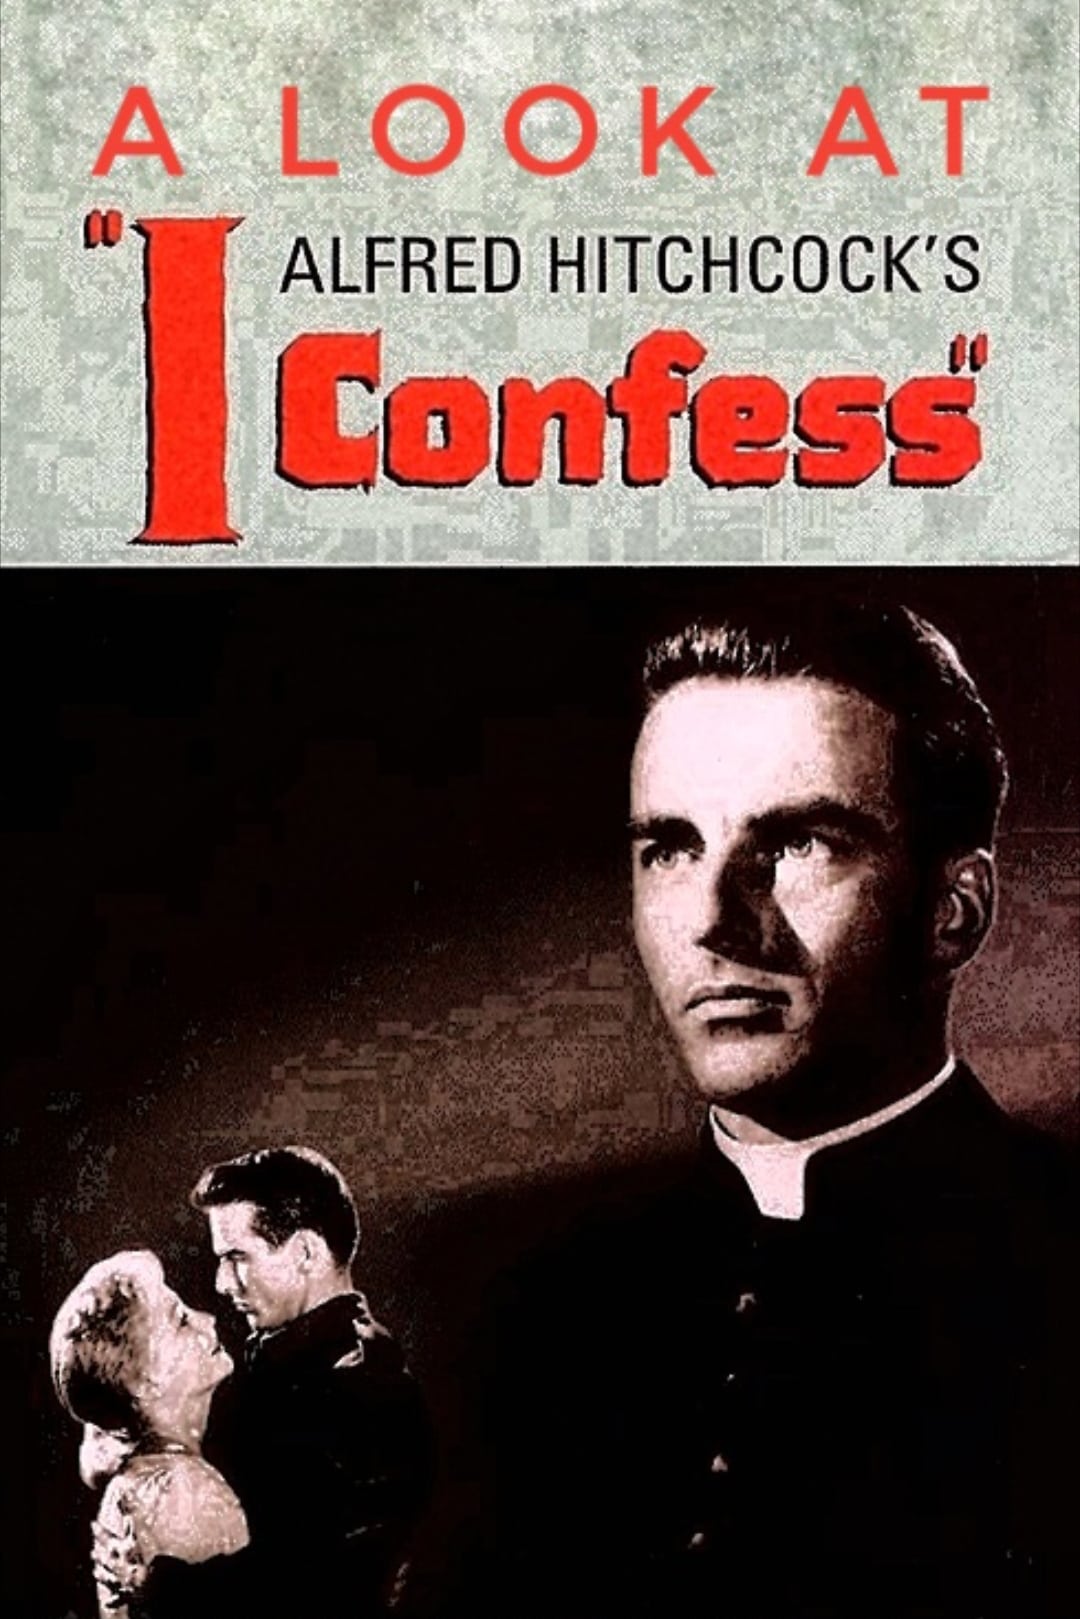 Hitchcock's Confession: A Look at I Confess